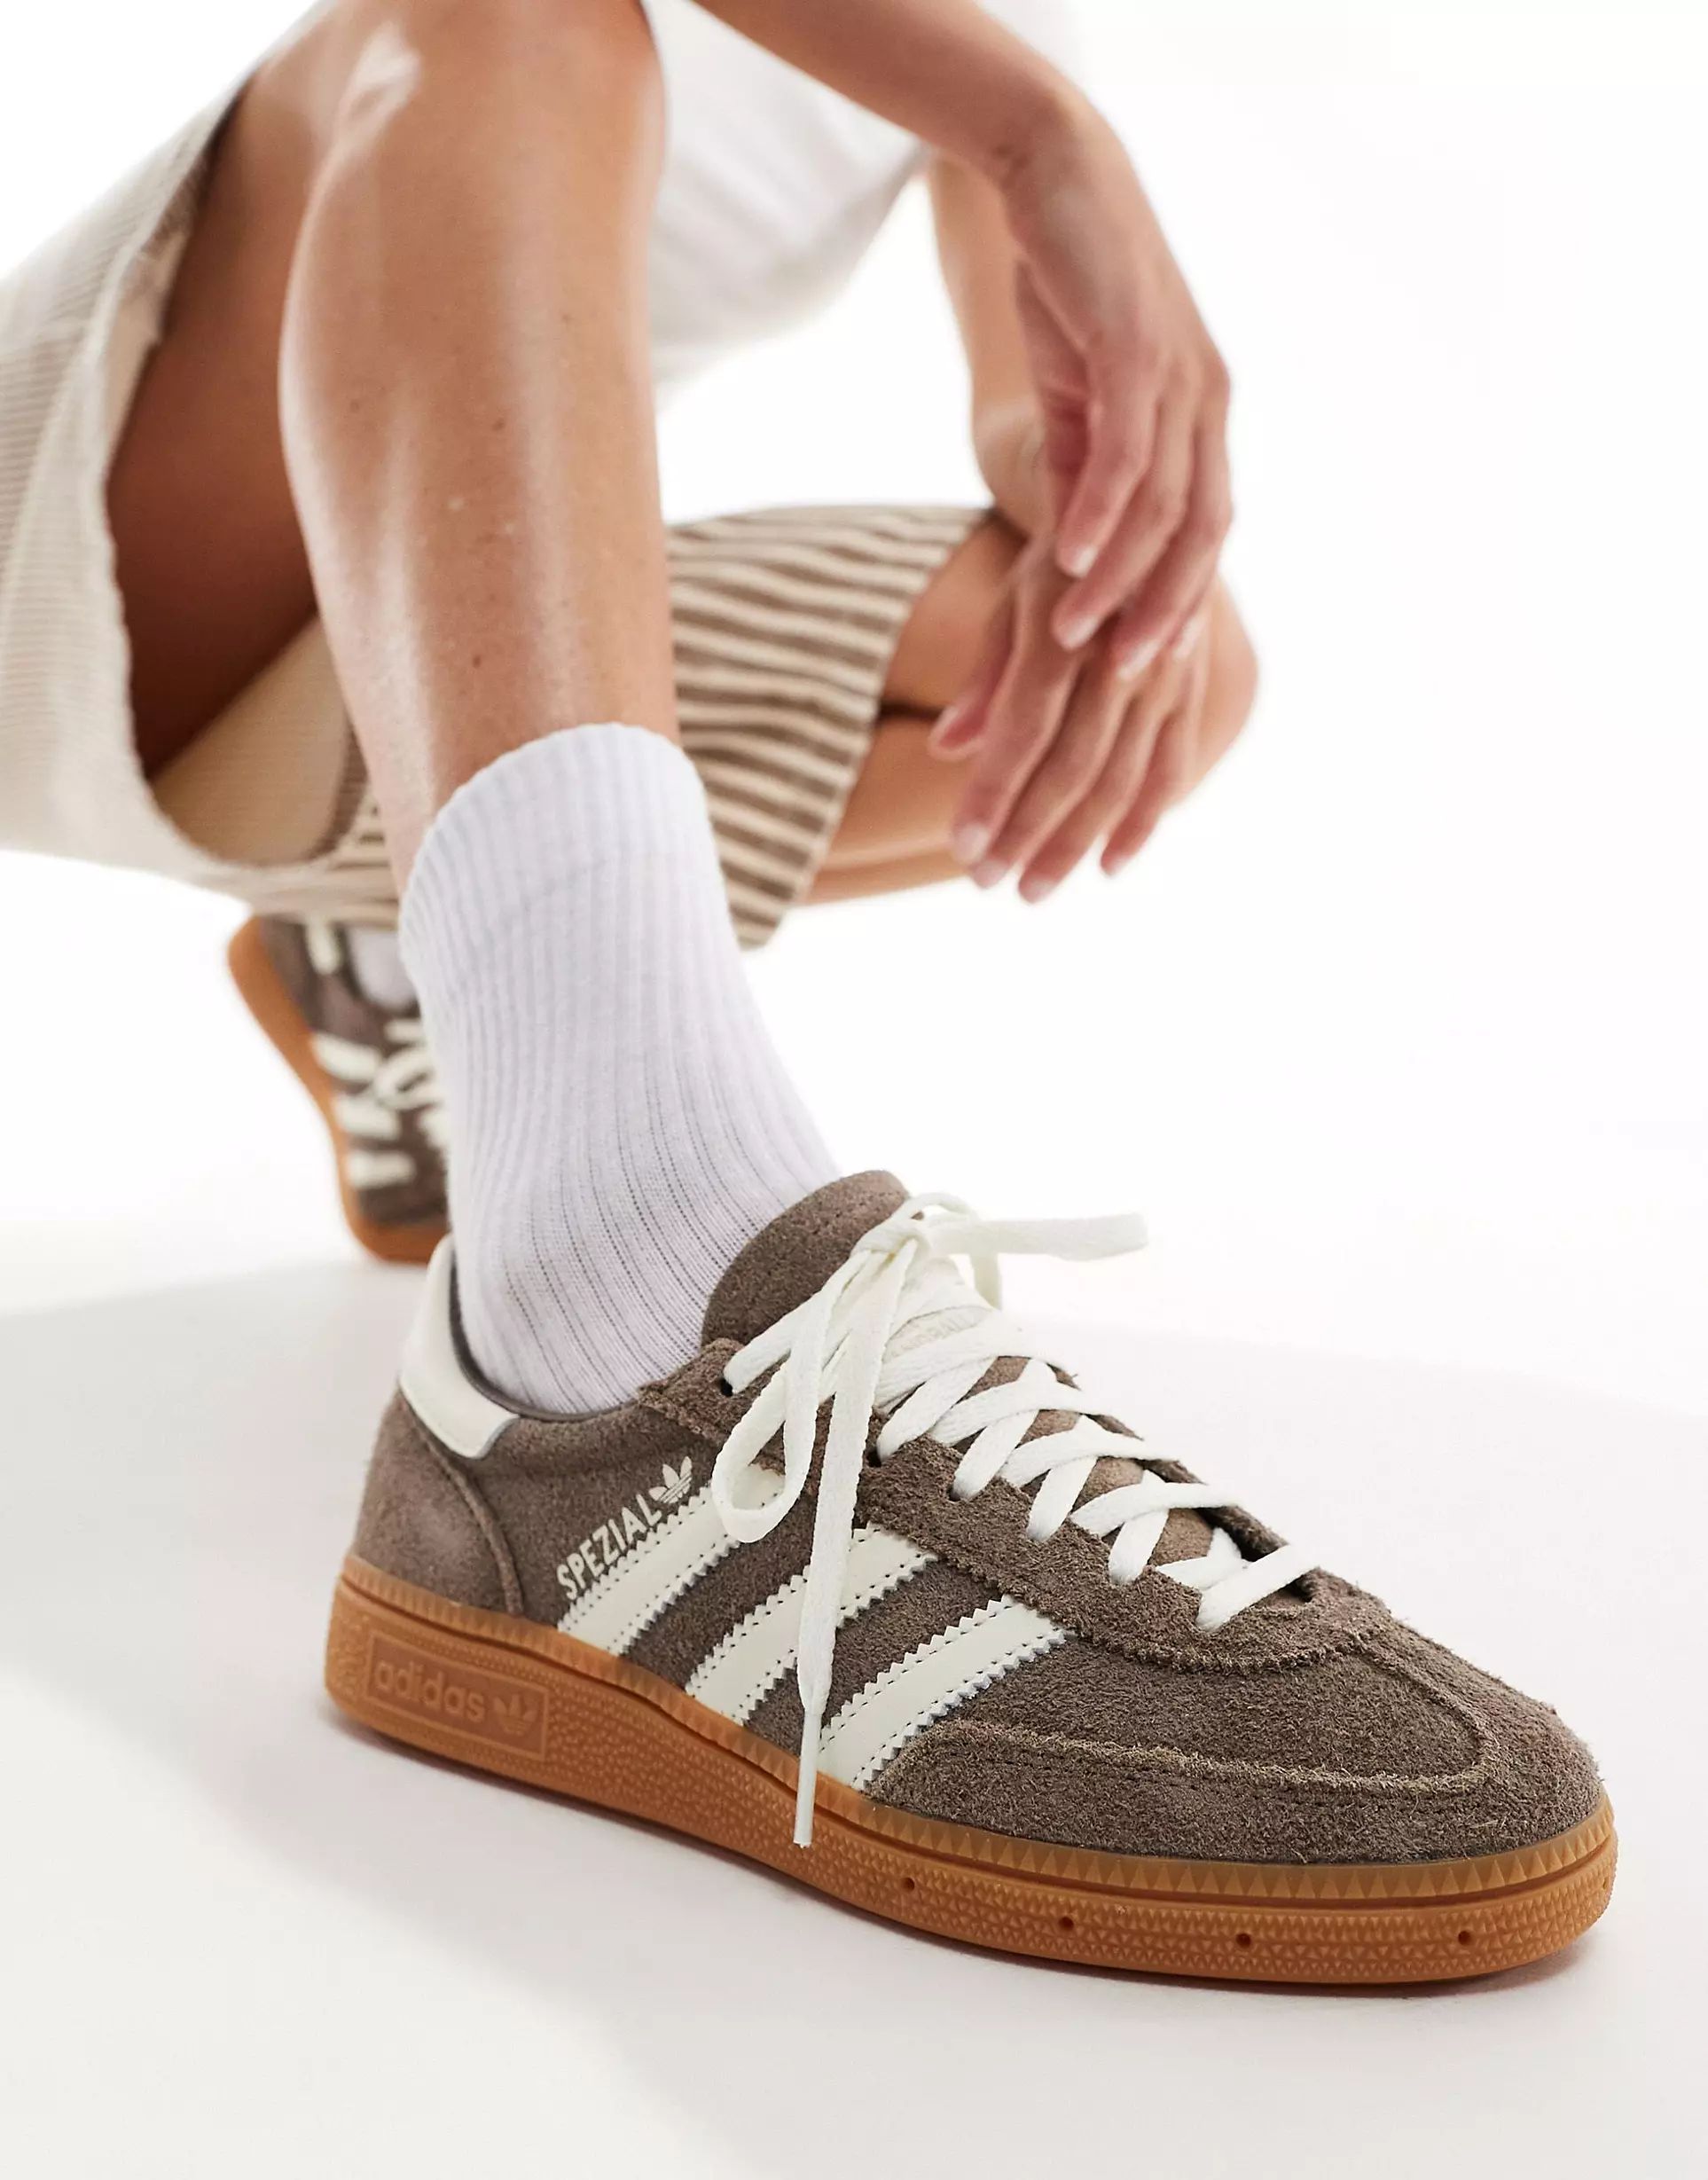 adidas Originals Handball Spezial sneakers in brown and white | ASOS (Global)